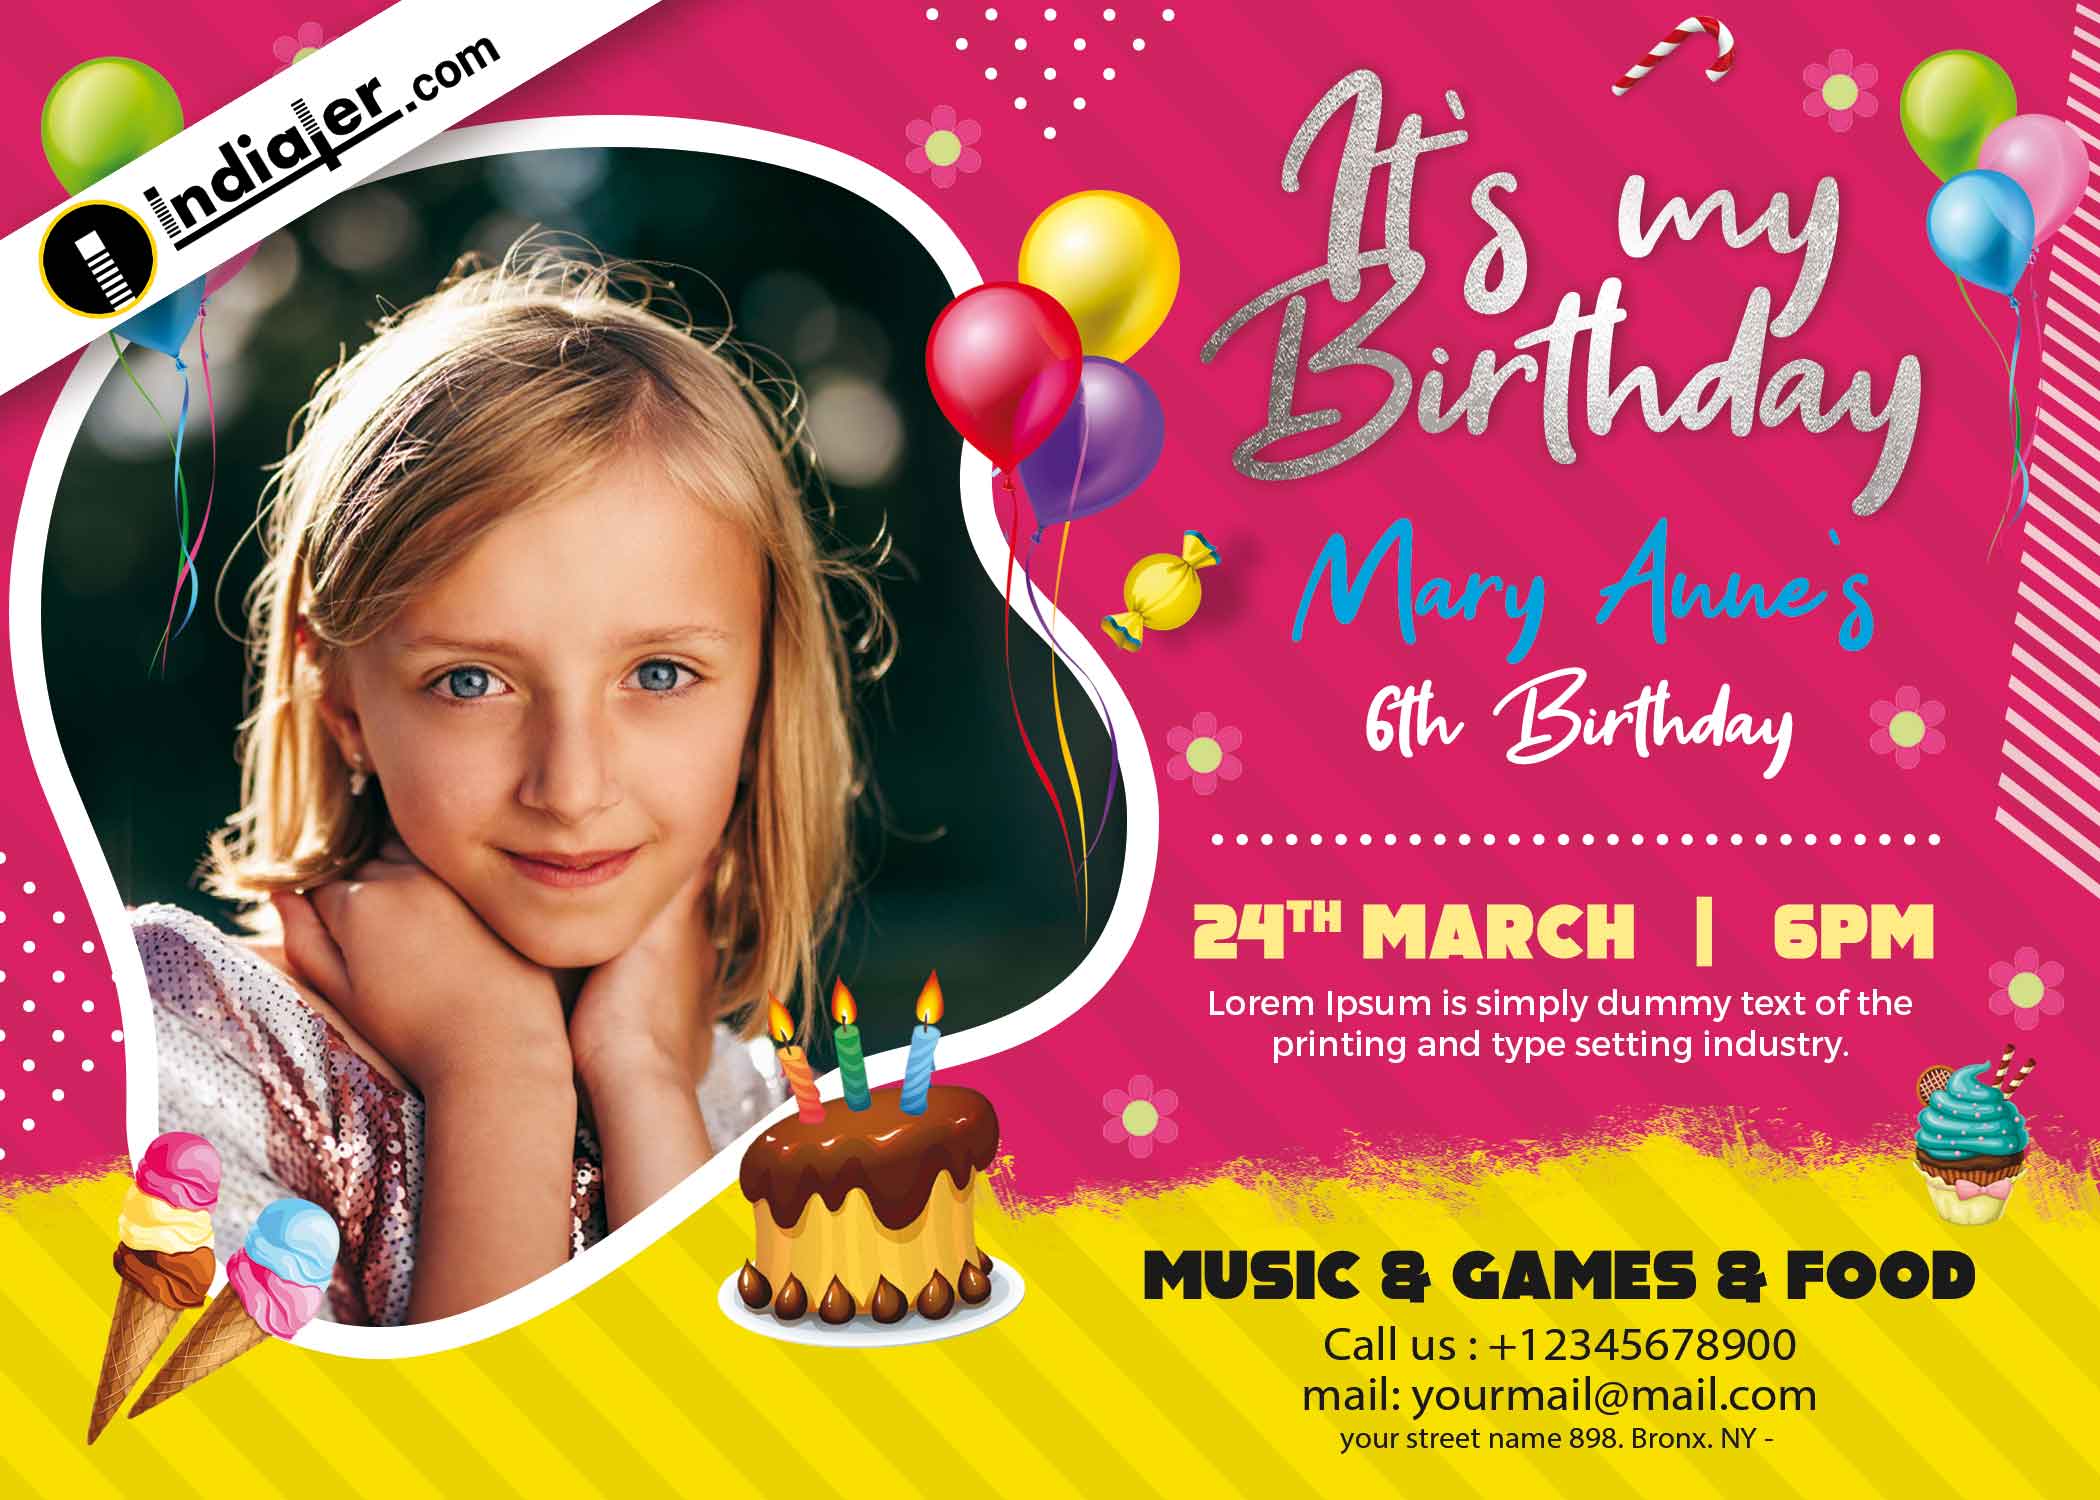 create-birthday-invitation-card-online-free-sale-now-save-53-jlcatj-gob-mx